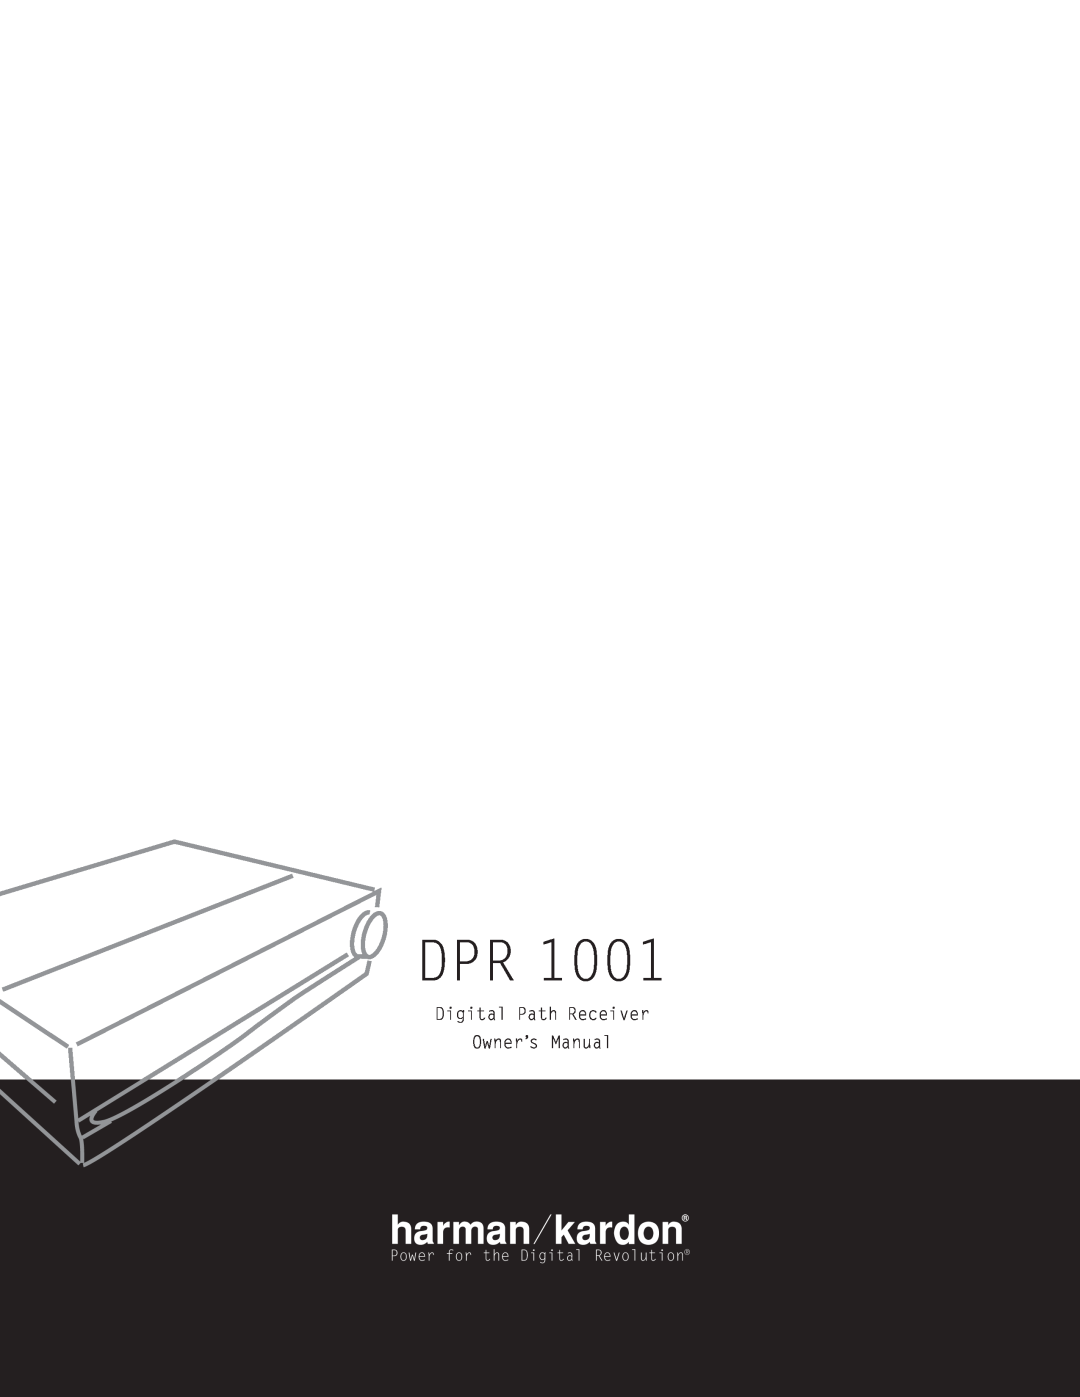 Harman-Kardon DPR 1001 owner manual Digital Path Receiver Owner’s Manual, Power for the Digital Revolution 